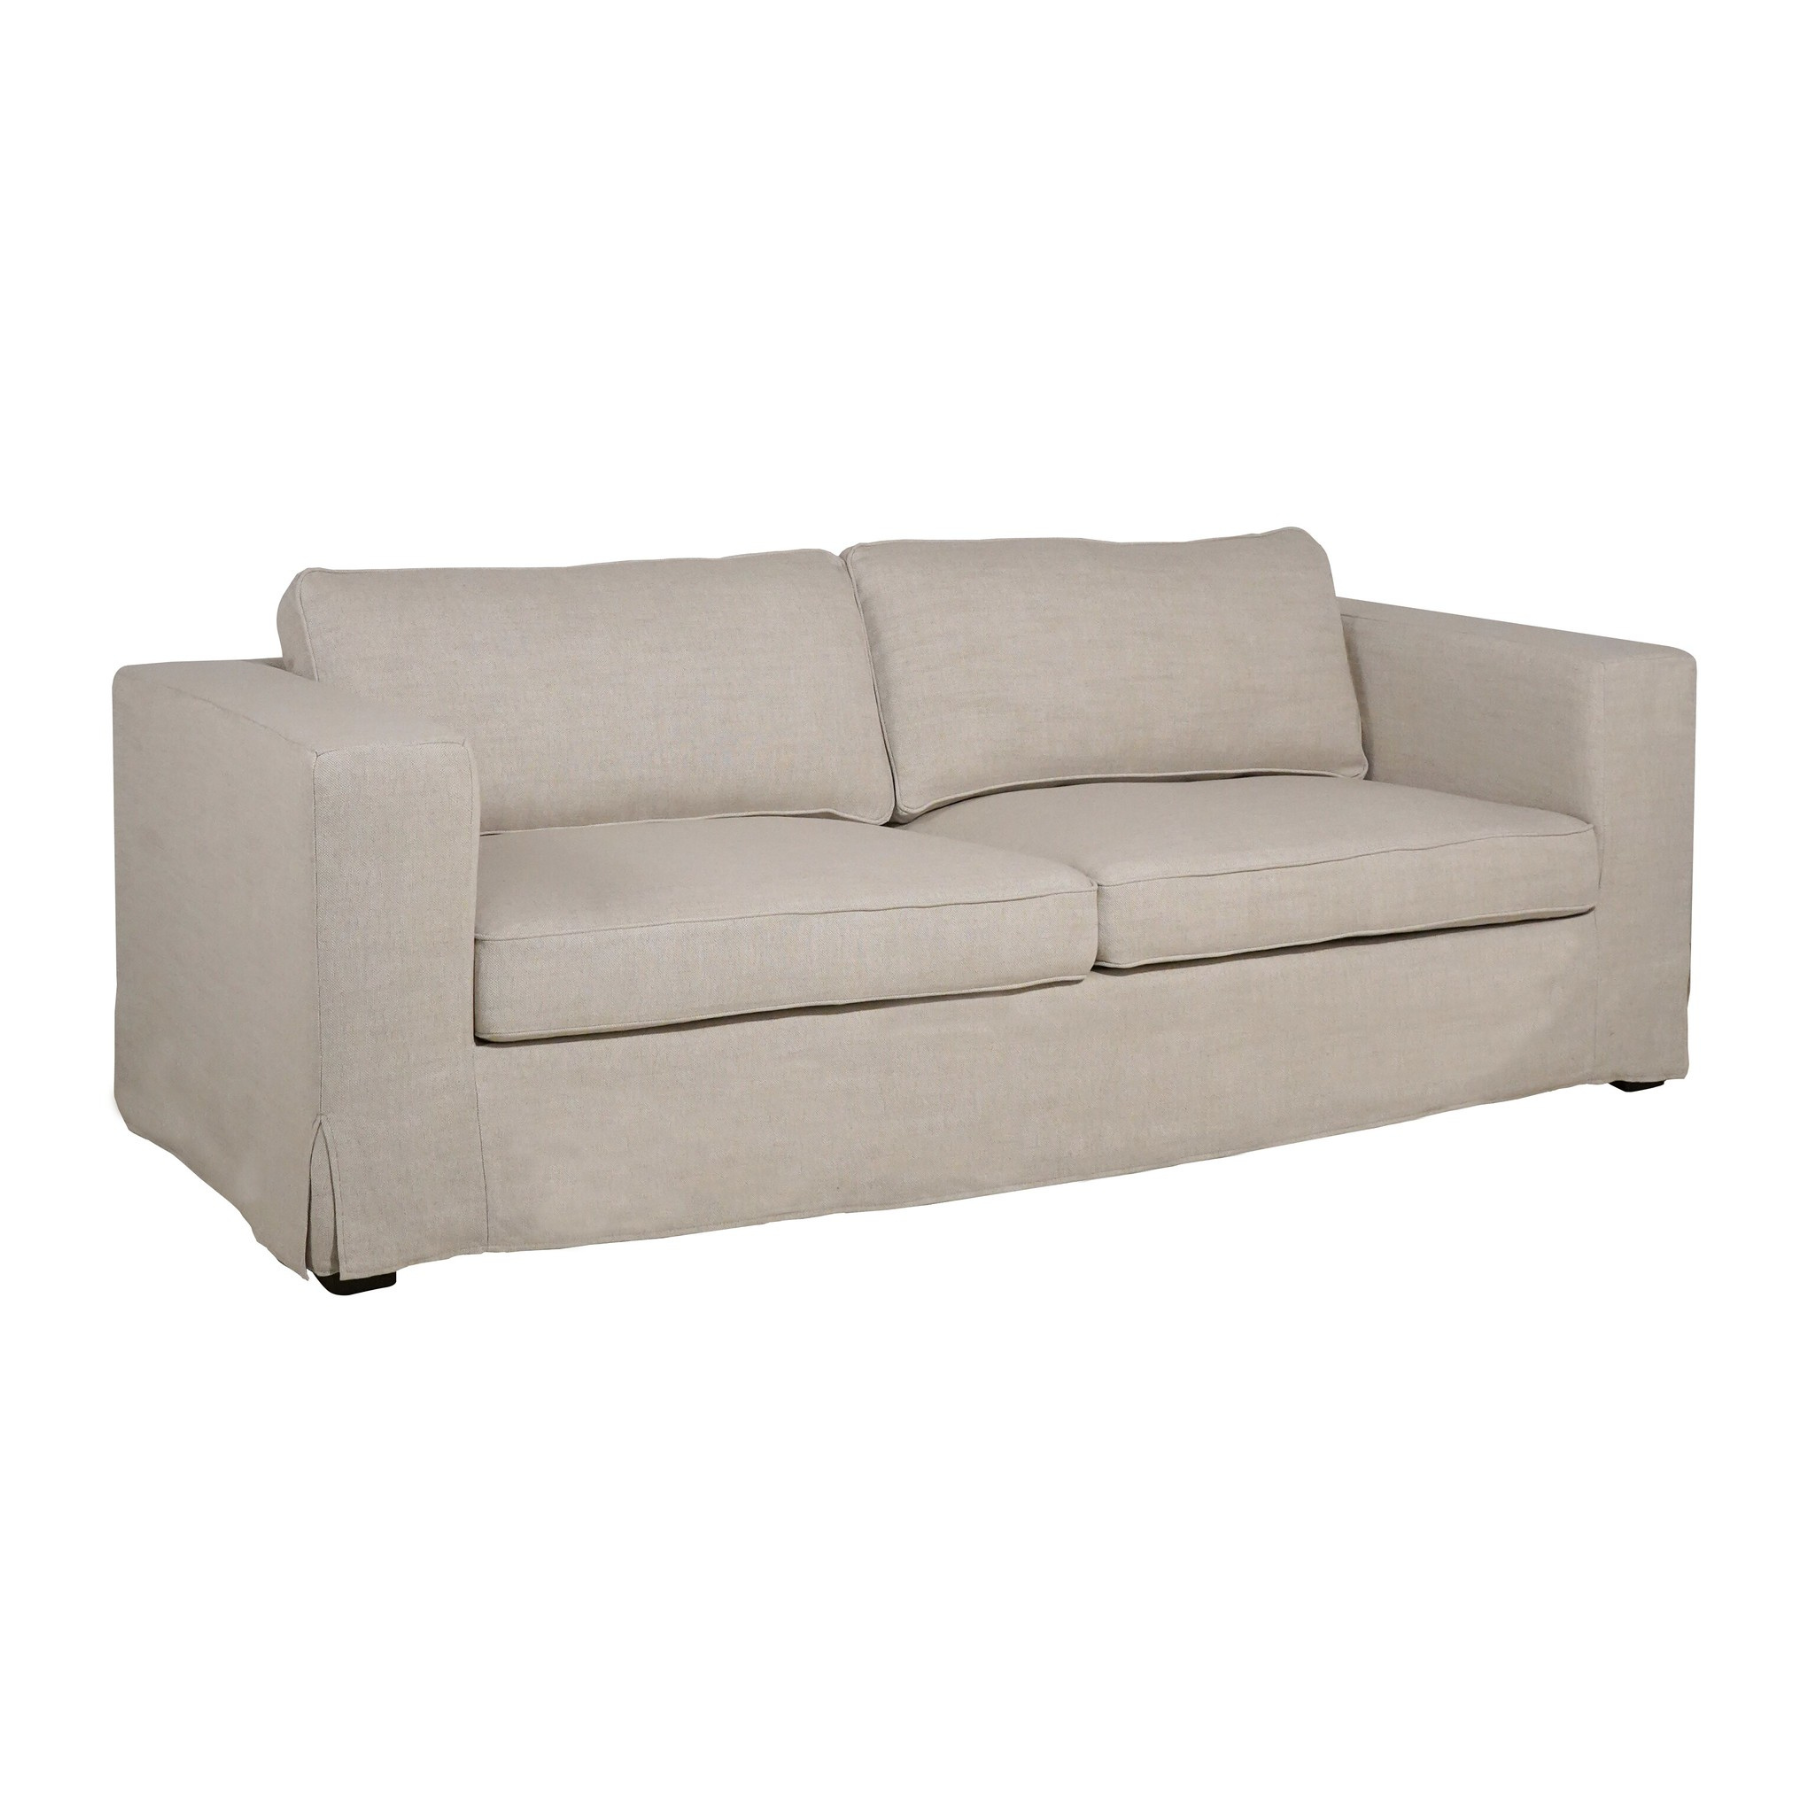 Hauser Linen Stores Sofa Company Slipcover – Denver Natural